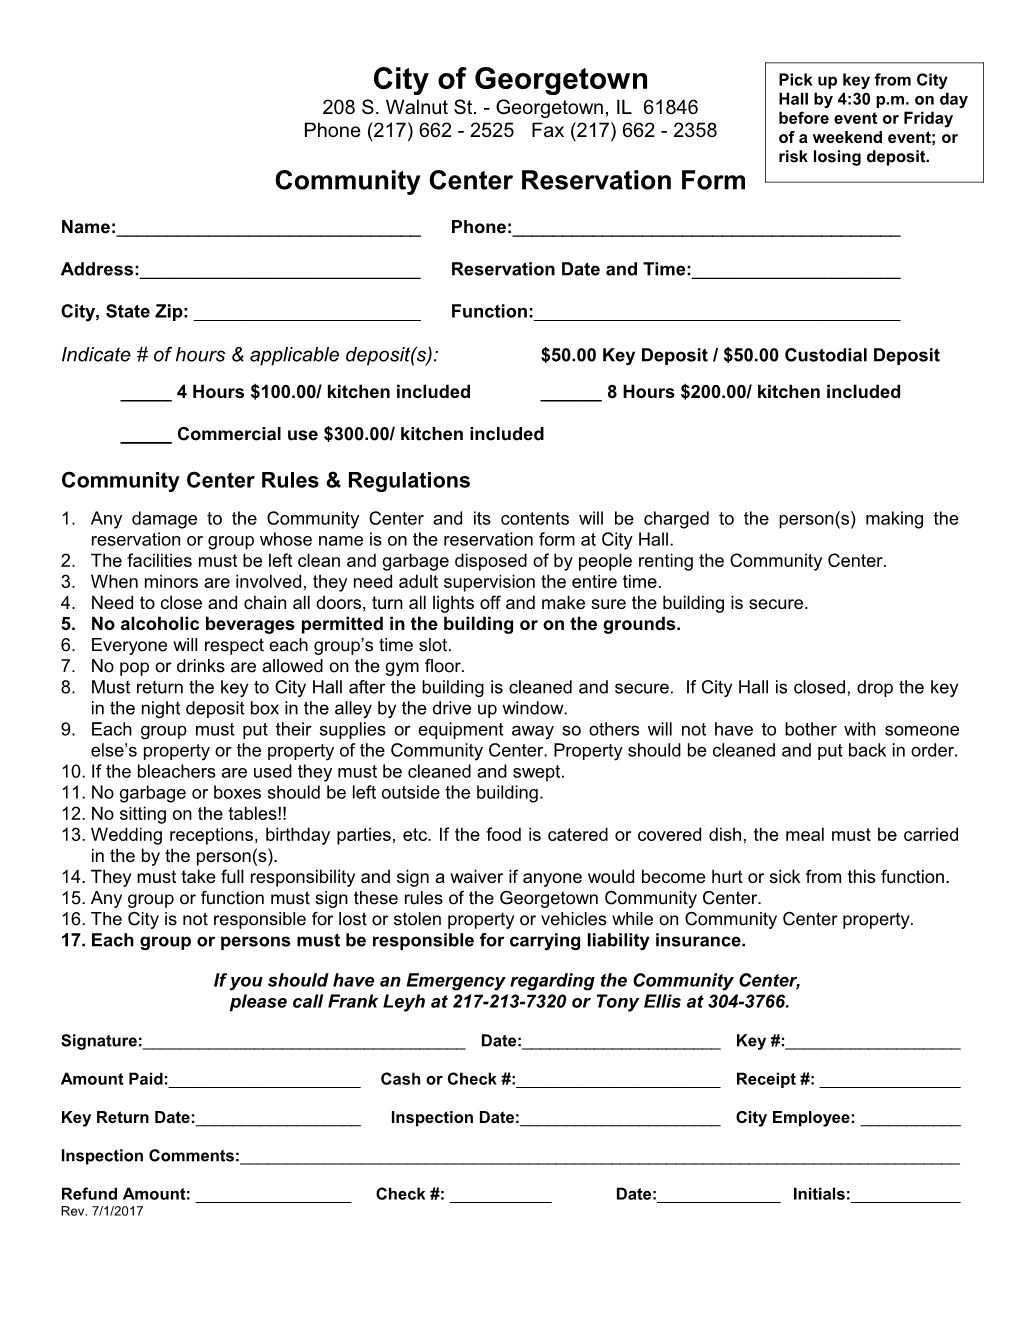 Community Center Reservation Form